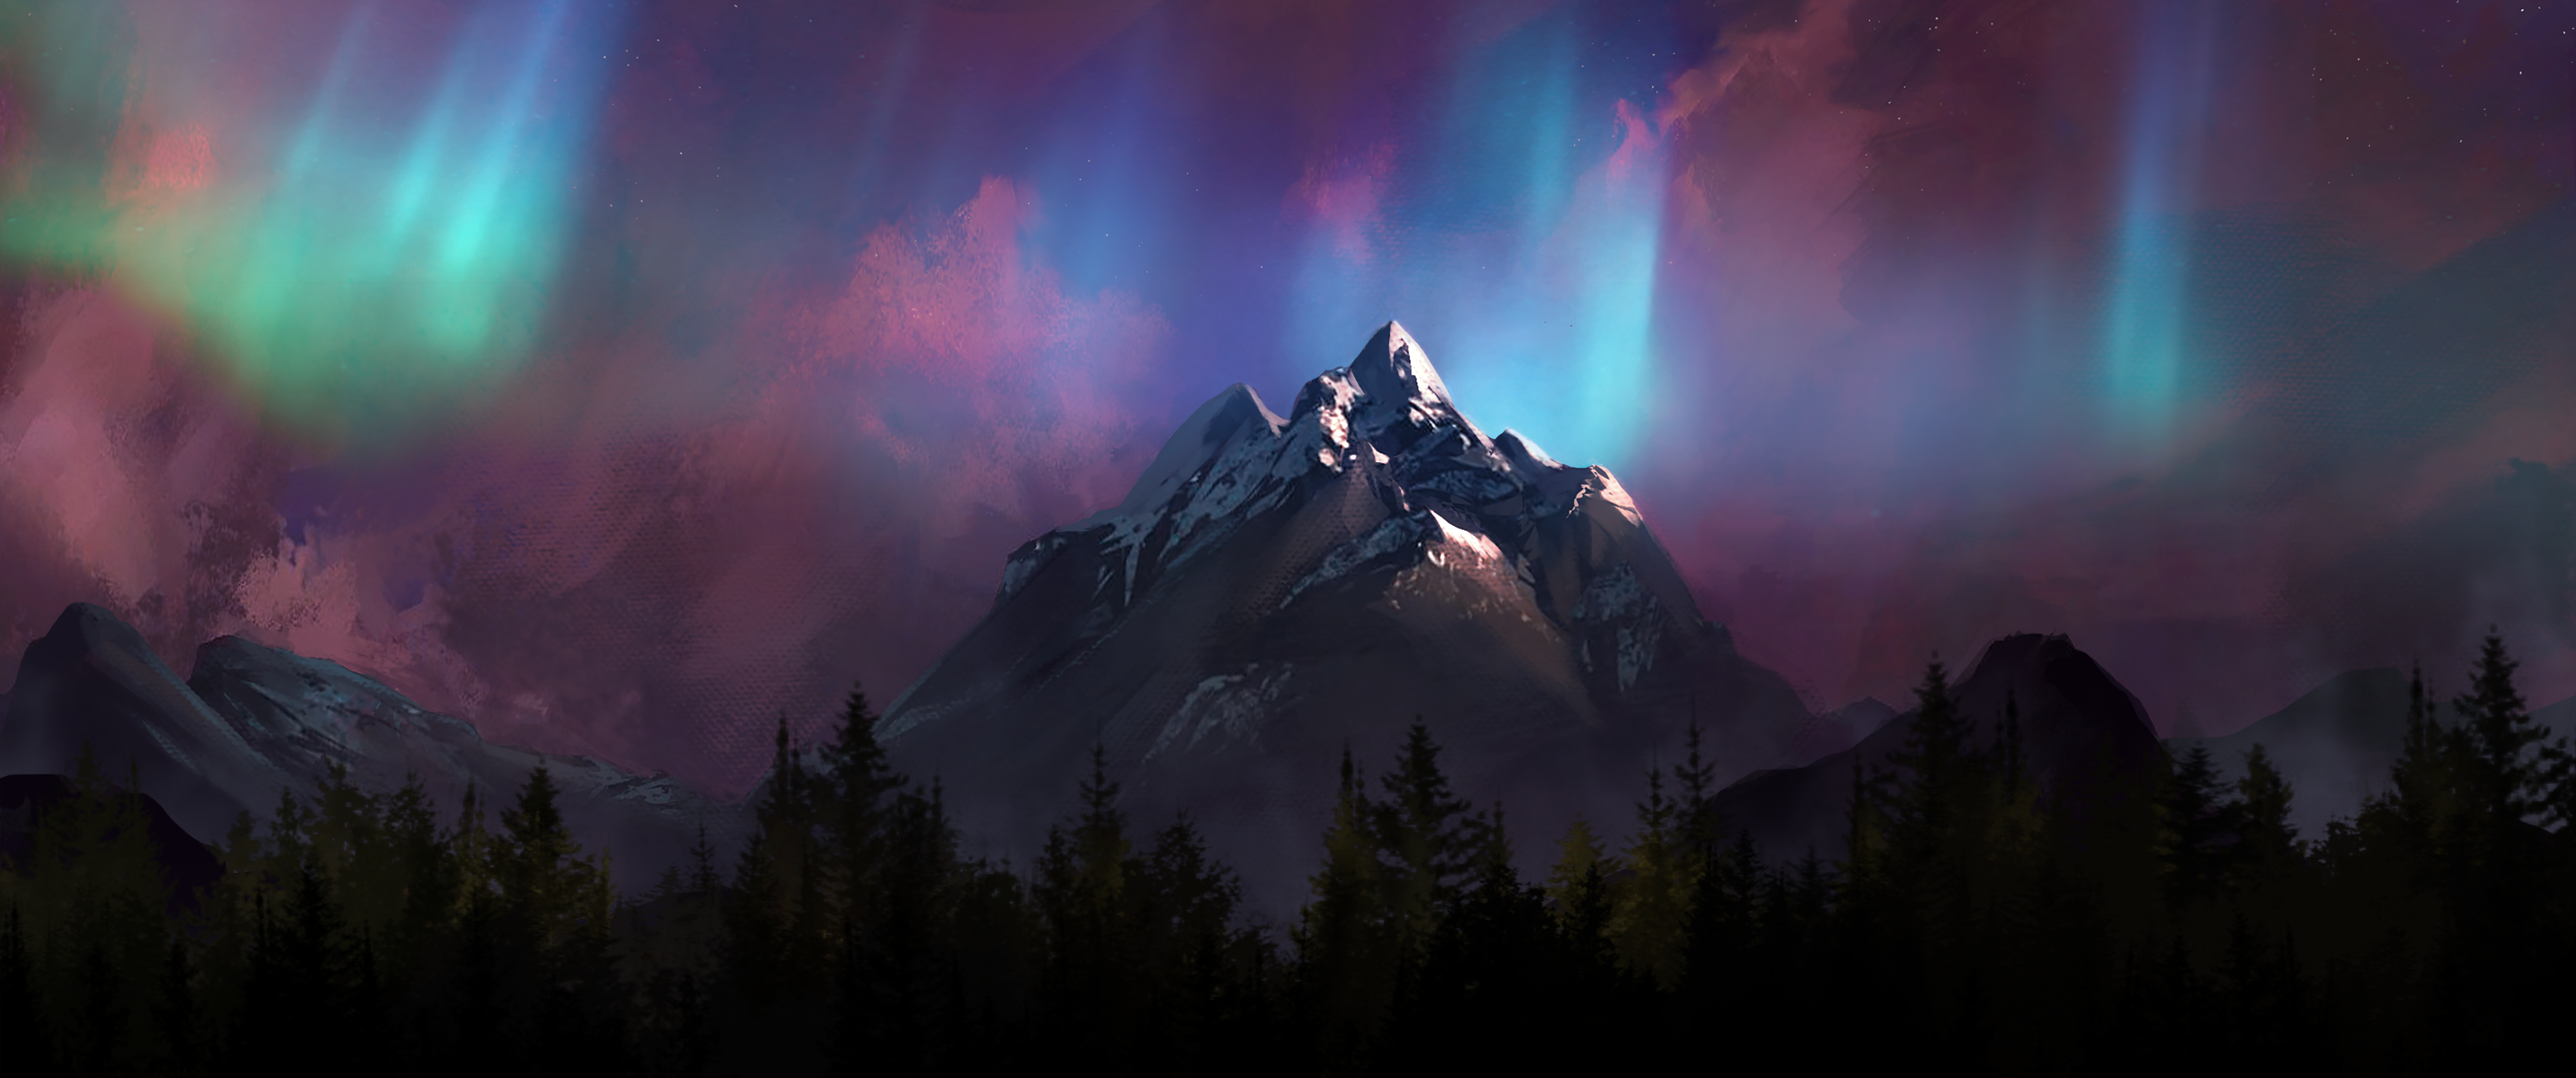 General 3440x1440 mountains aurorae digital painting forest digital art